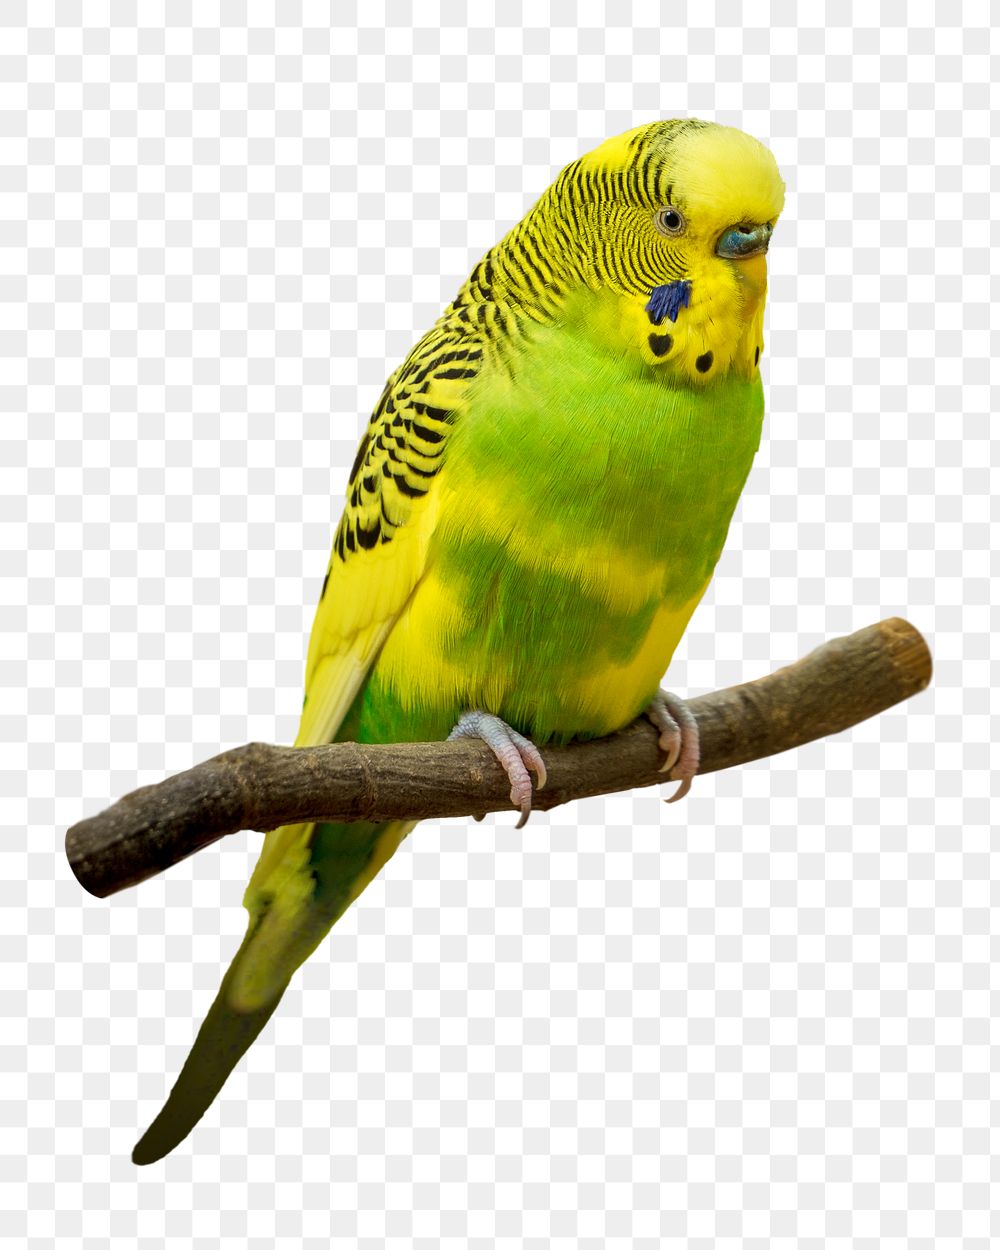 Green parakeet png, transparent background